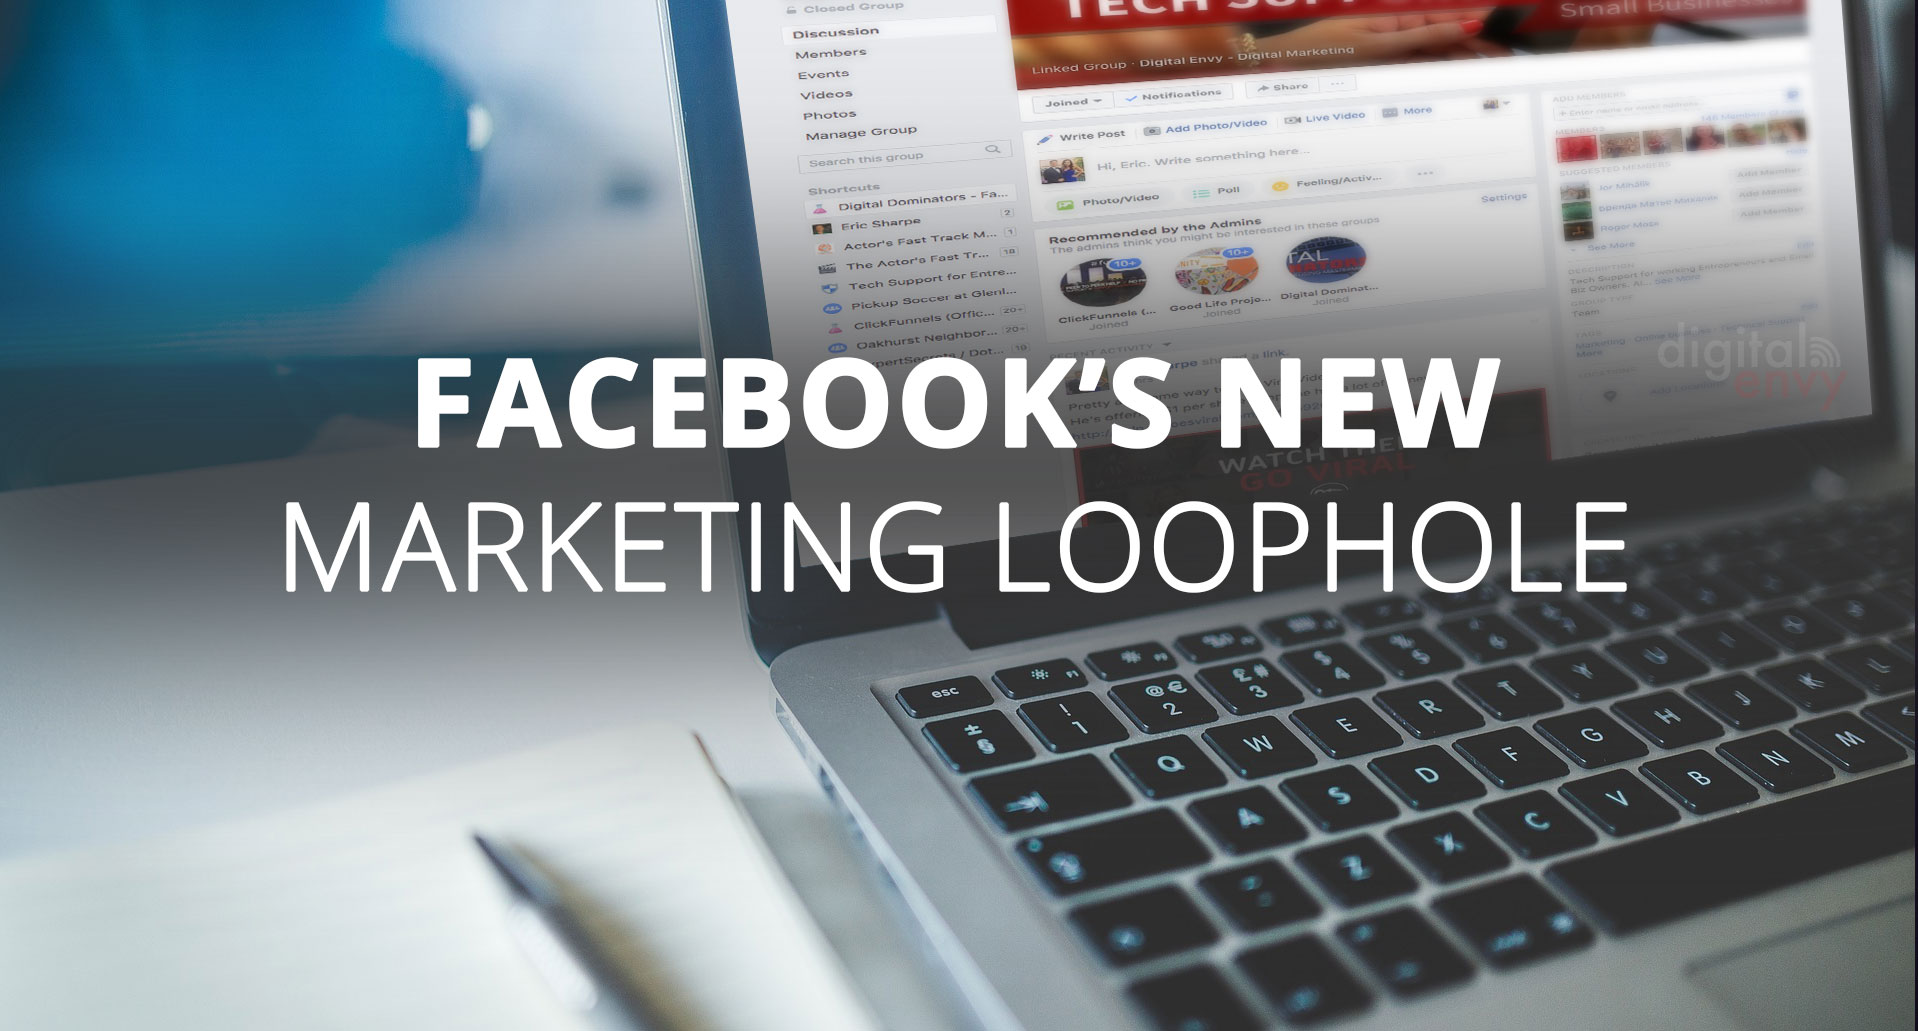 Facebook Marketing Loophole Discovered